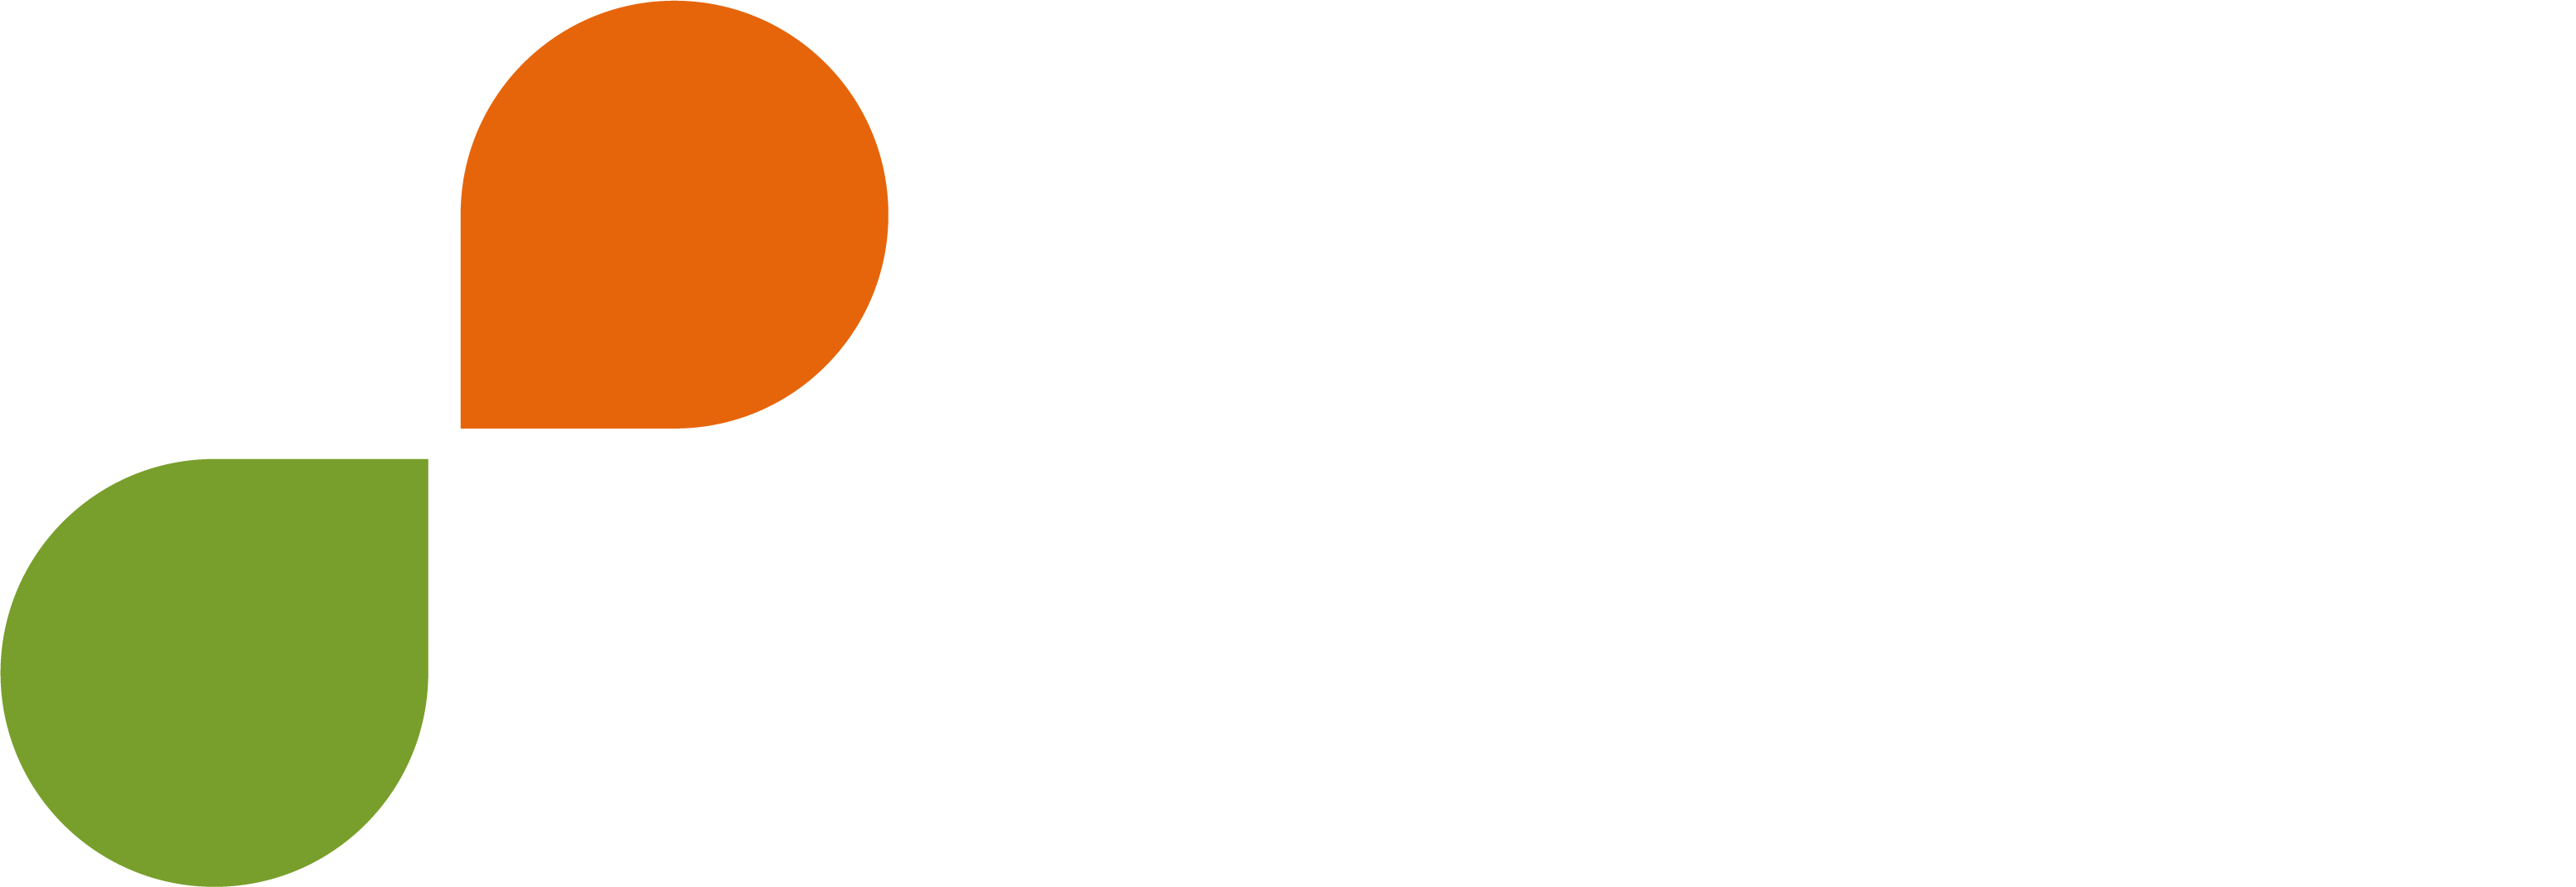 Hubken Group Logo - White - Landscape - RGB - 300 ppi